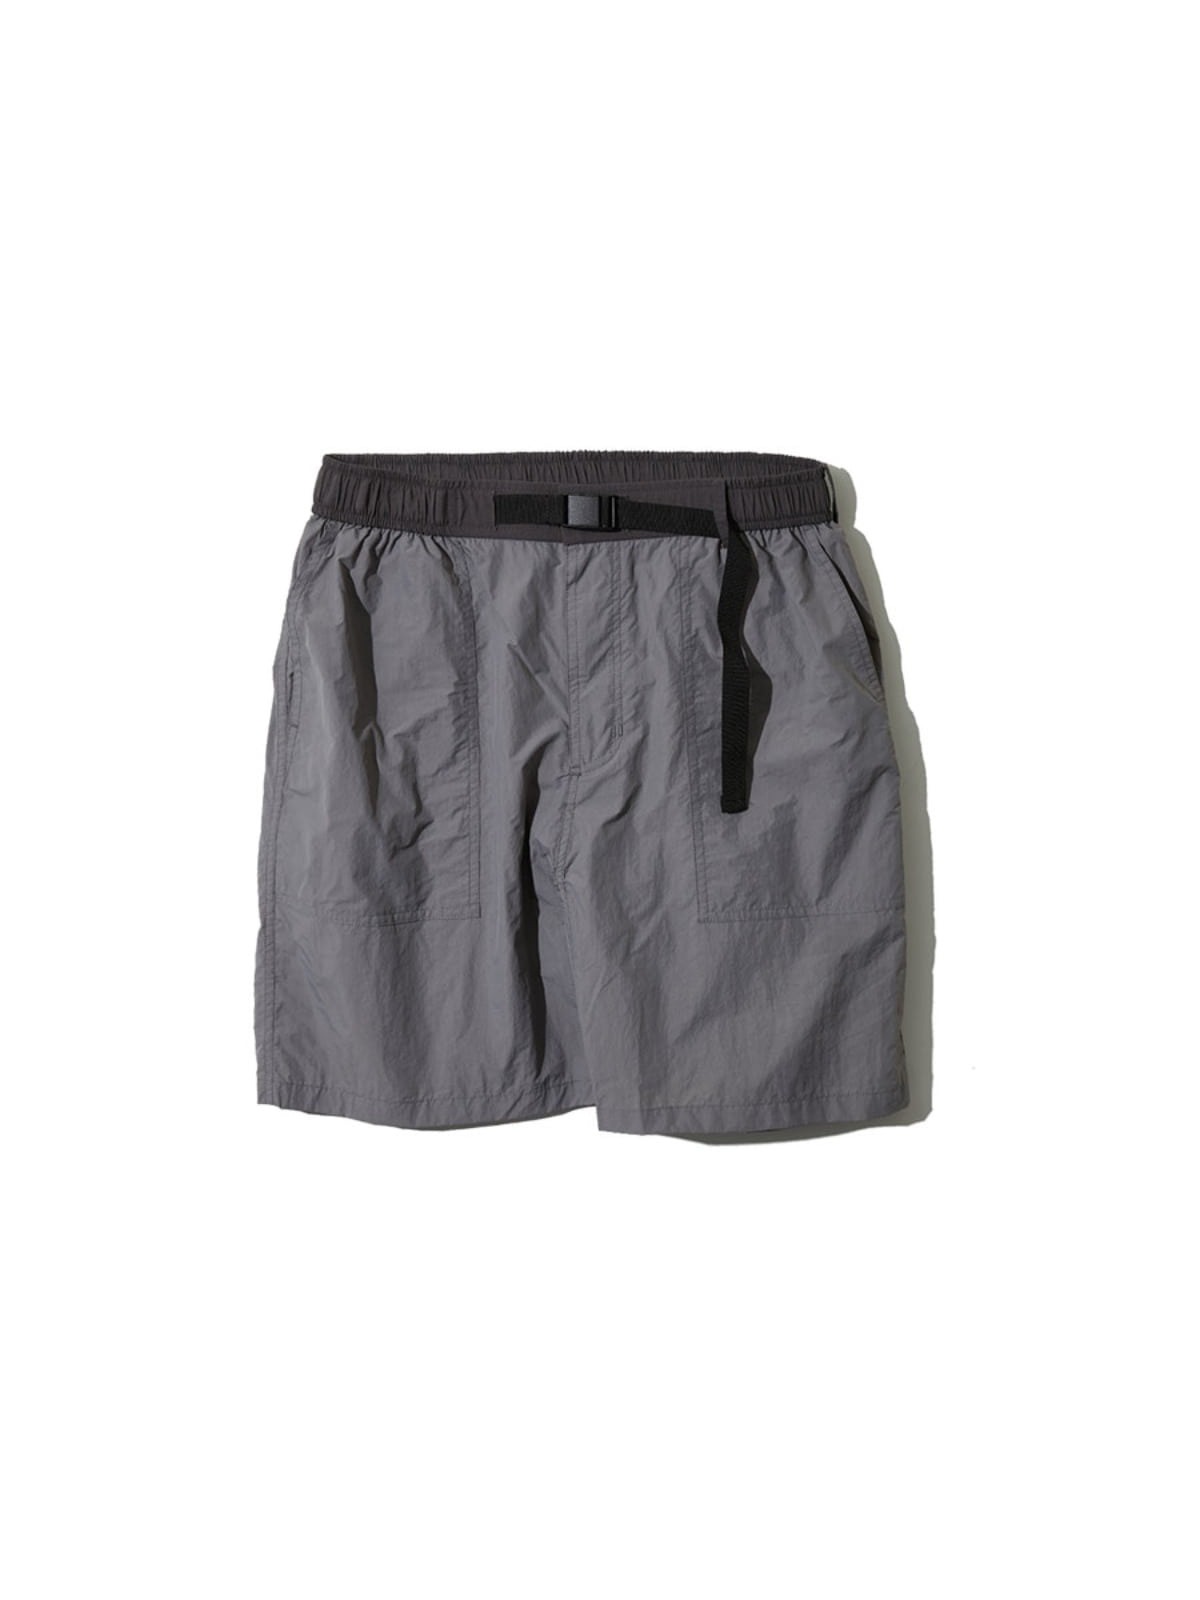 Mixed Baker Shorts (Dark Grey)